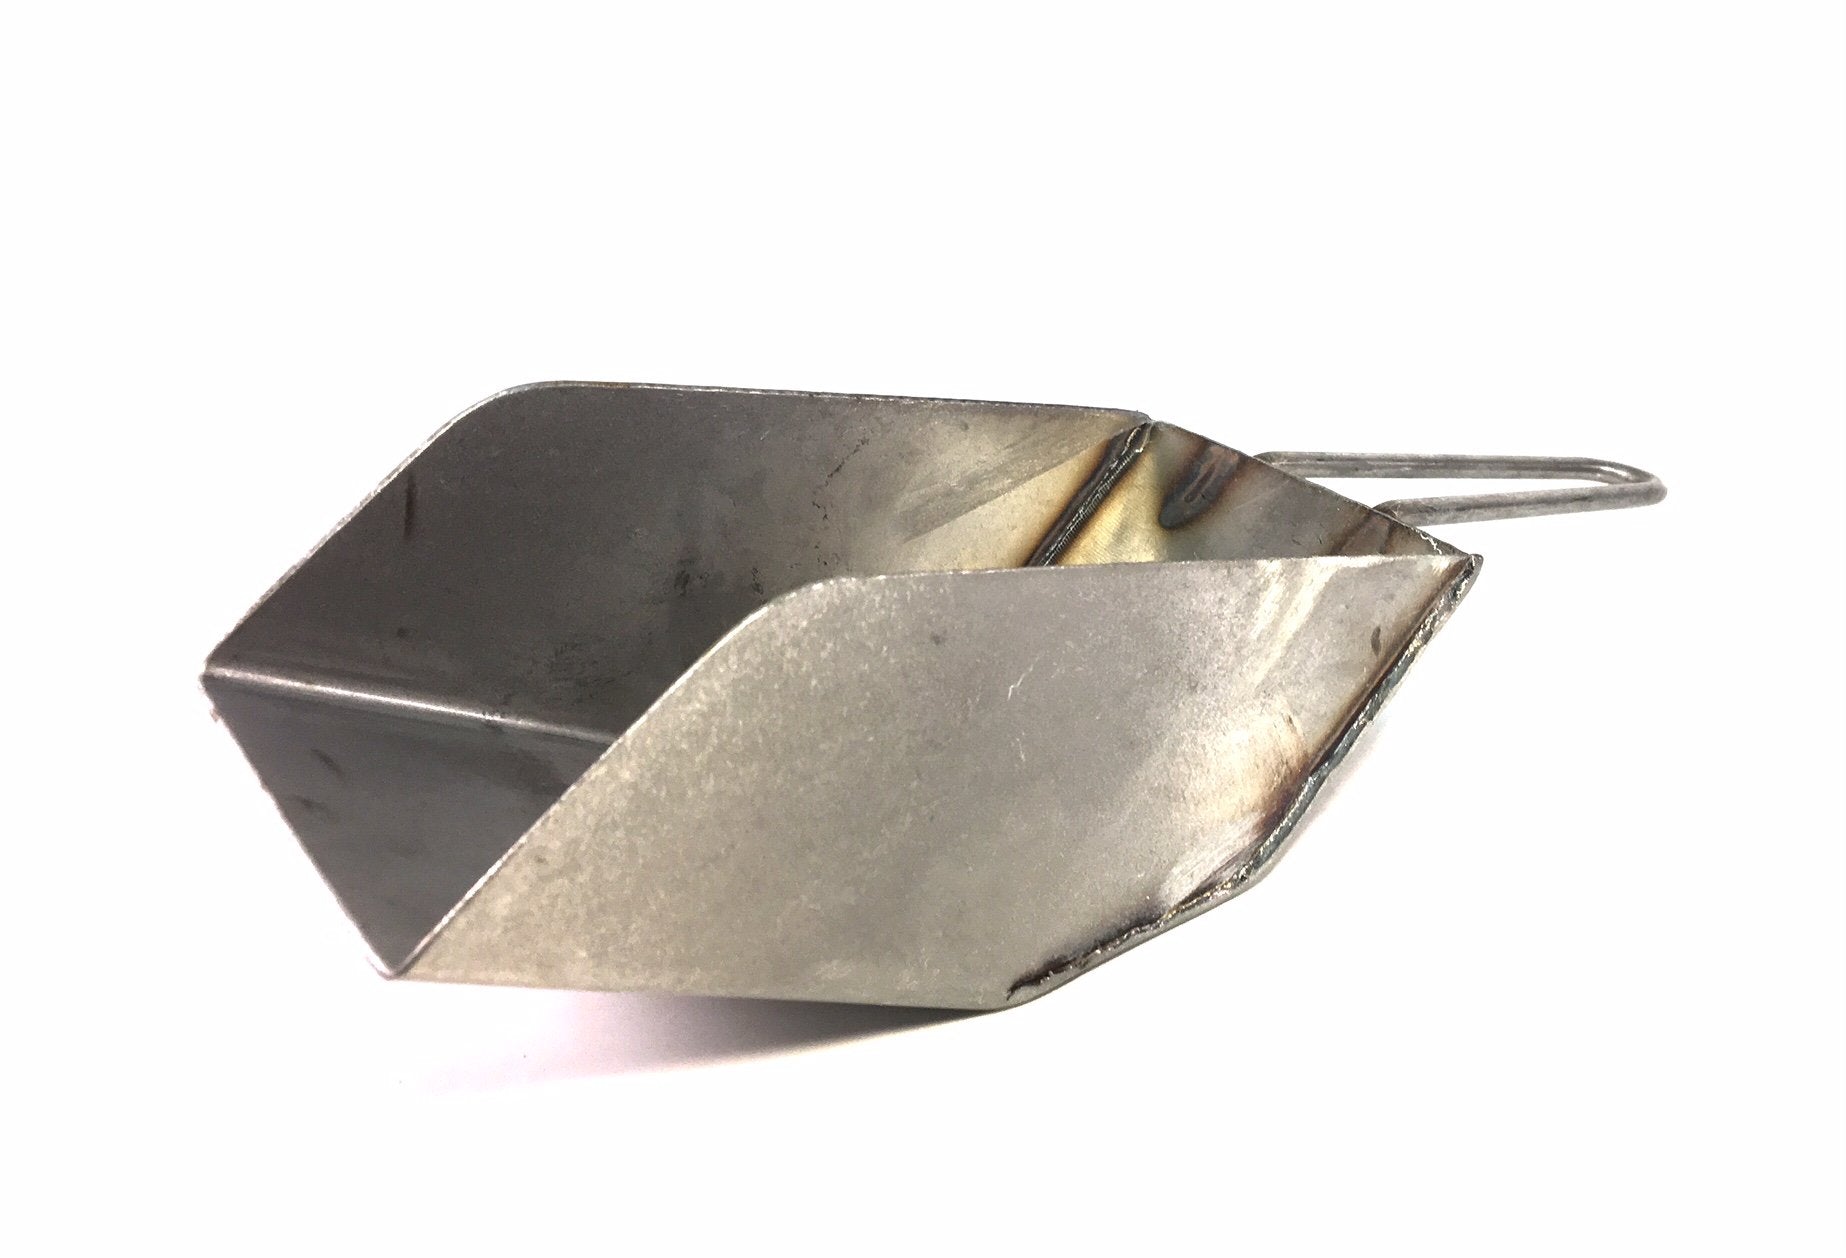 FoodScoop - hand scoop for the food industry Metal scoops